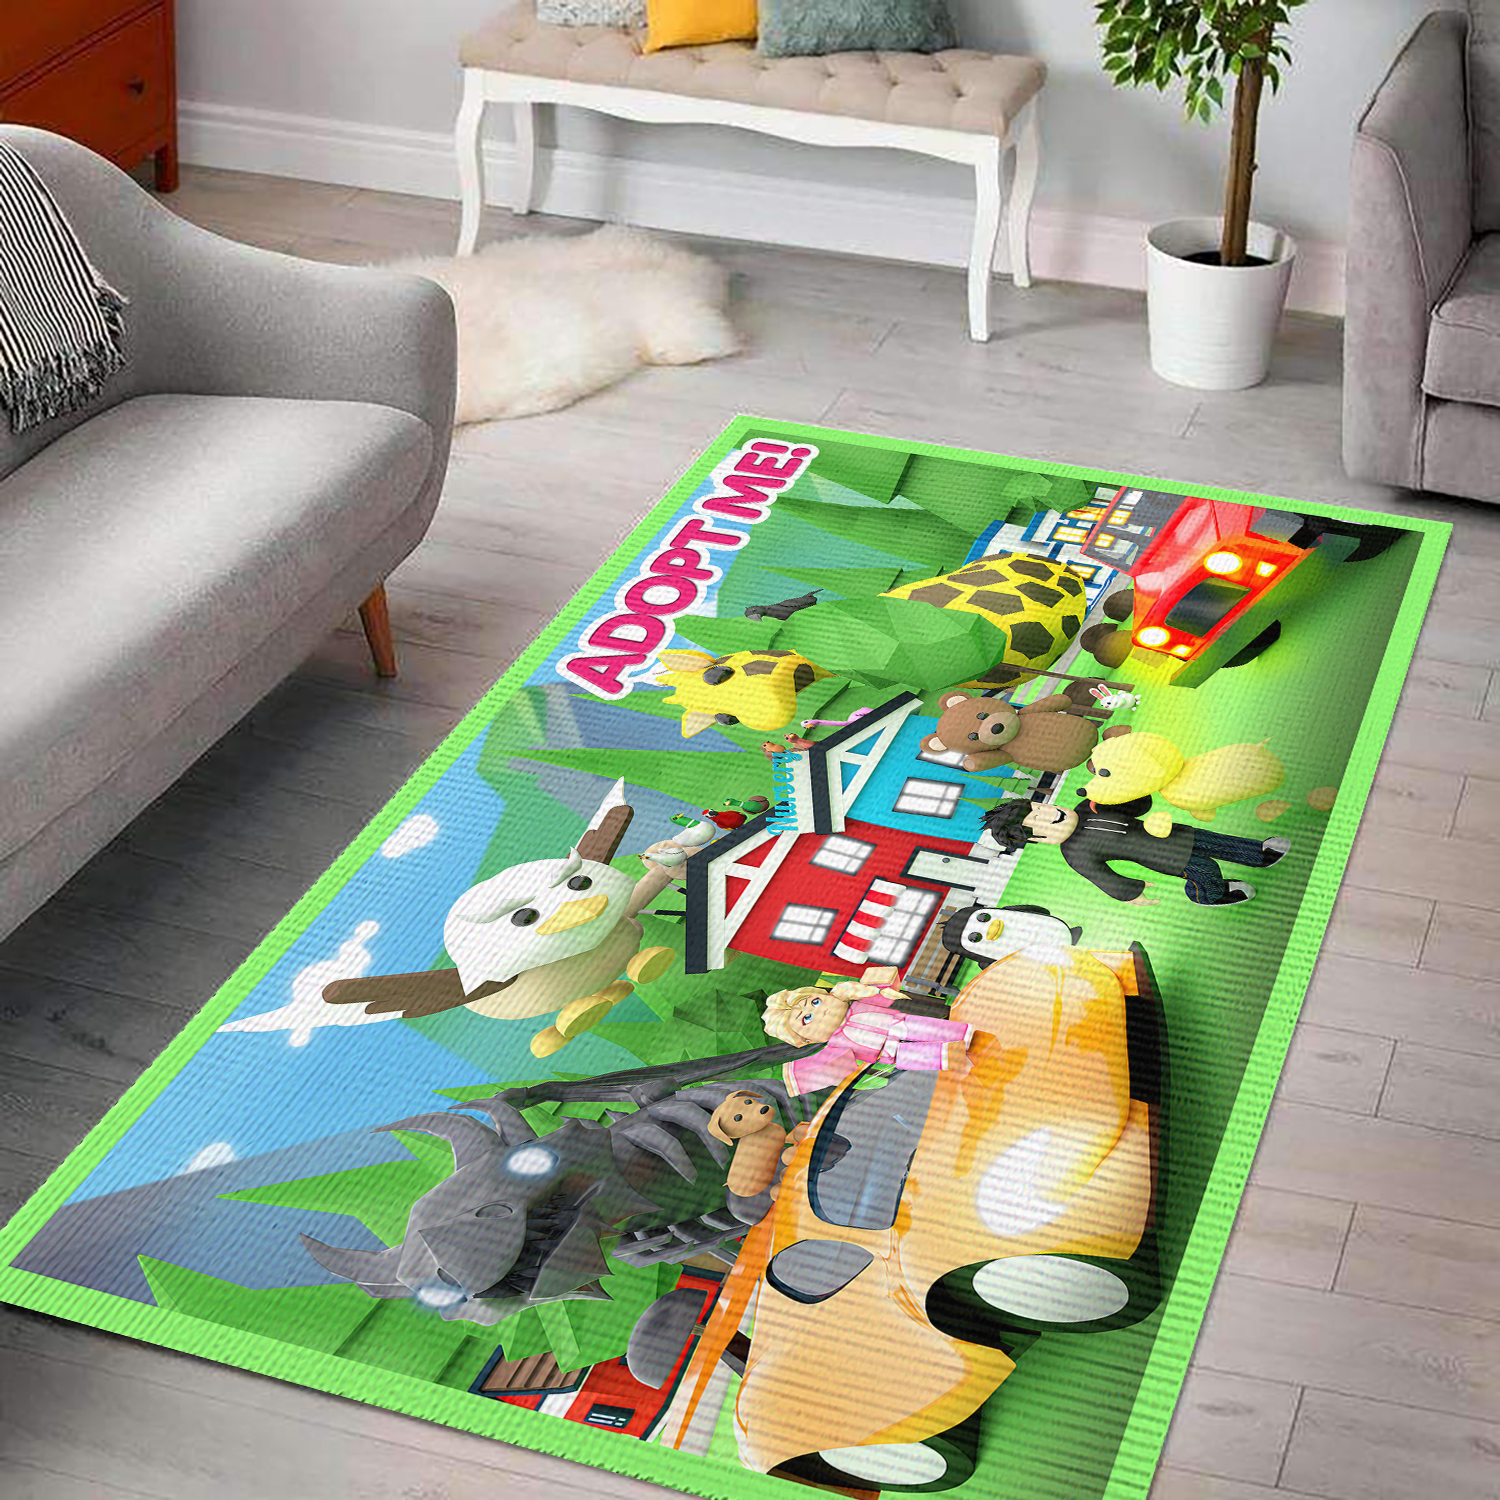 Adopt Me Life in Game Rug Carpet Kid's Bedroom Living Room